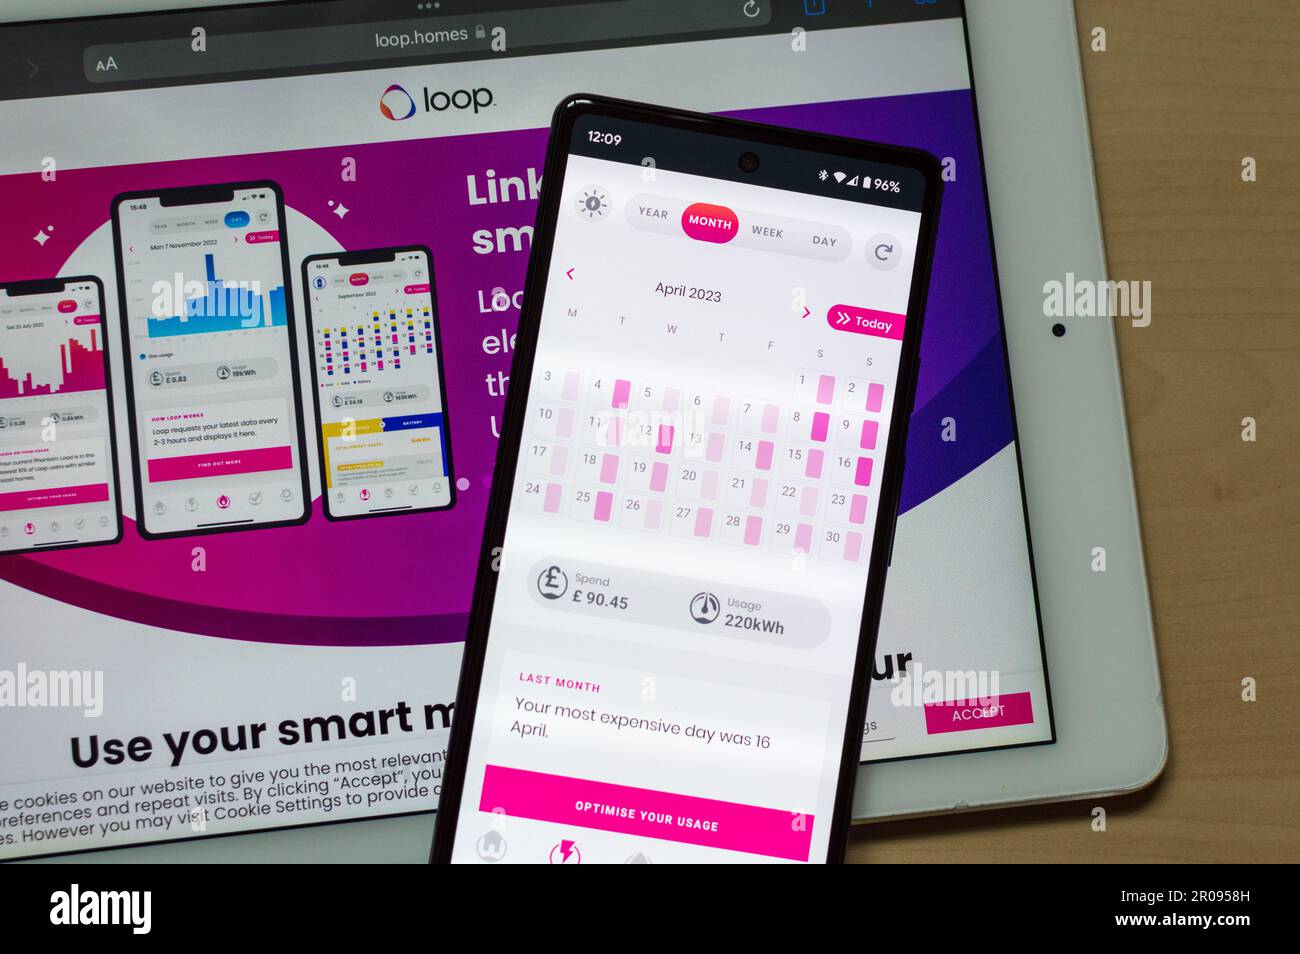 Loop Energy app on smartphone Stock Photo